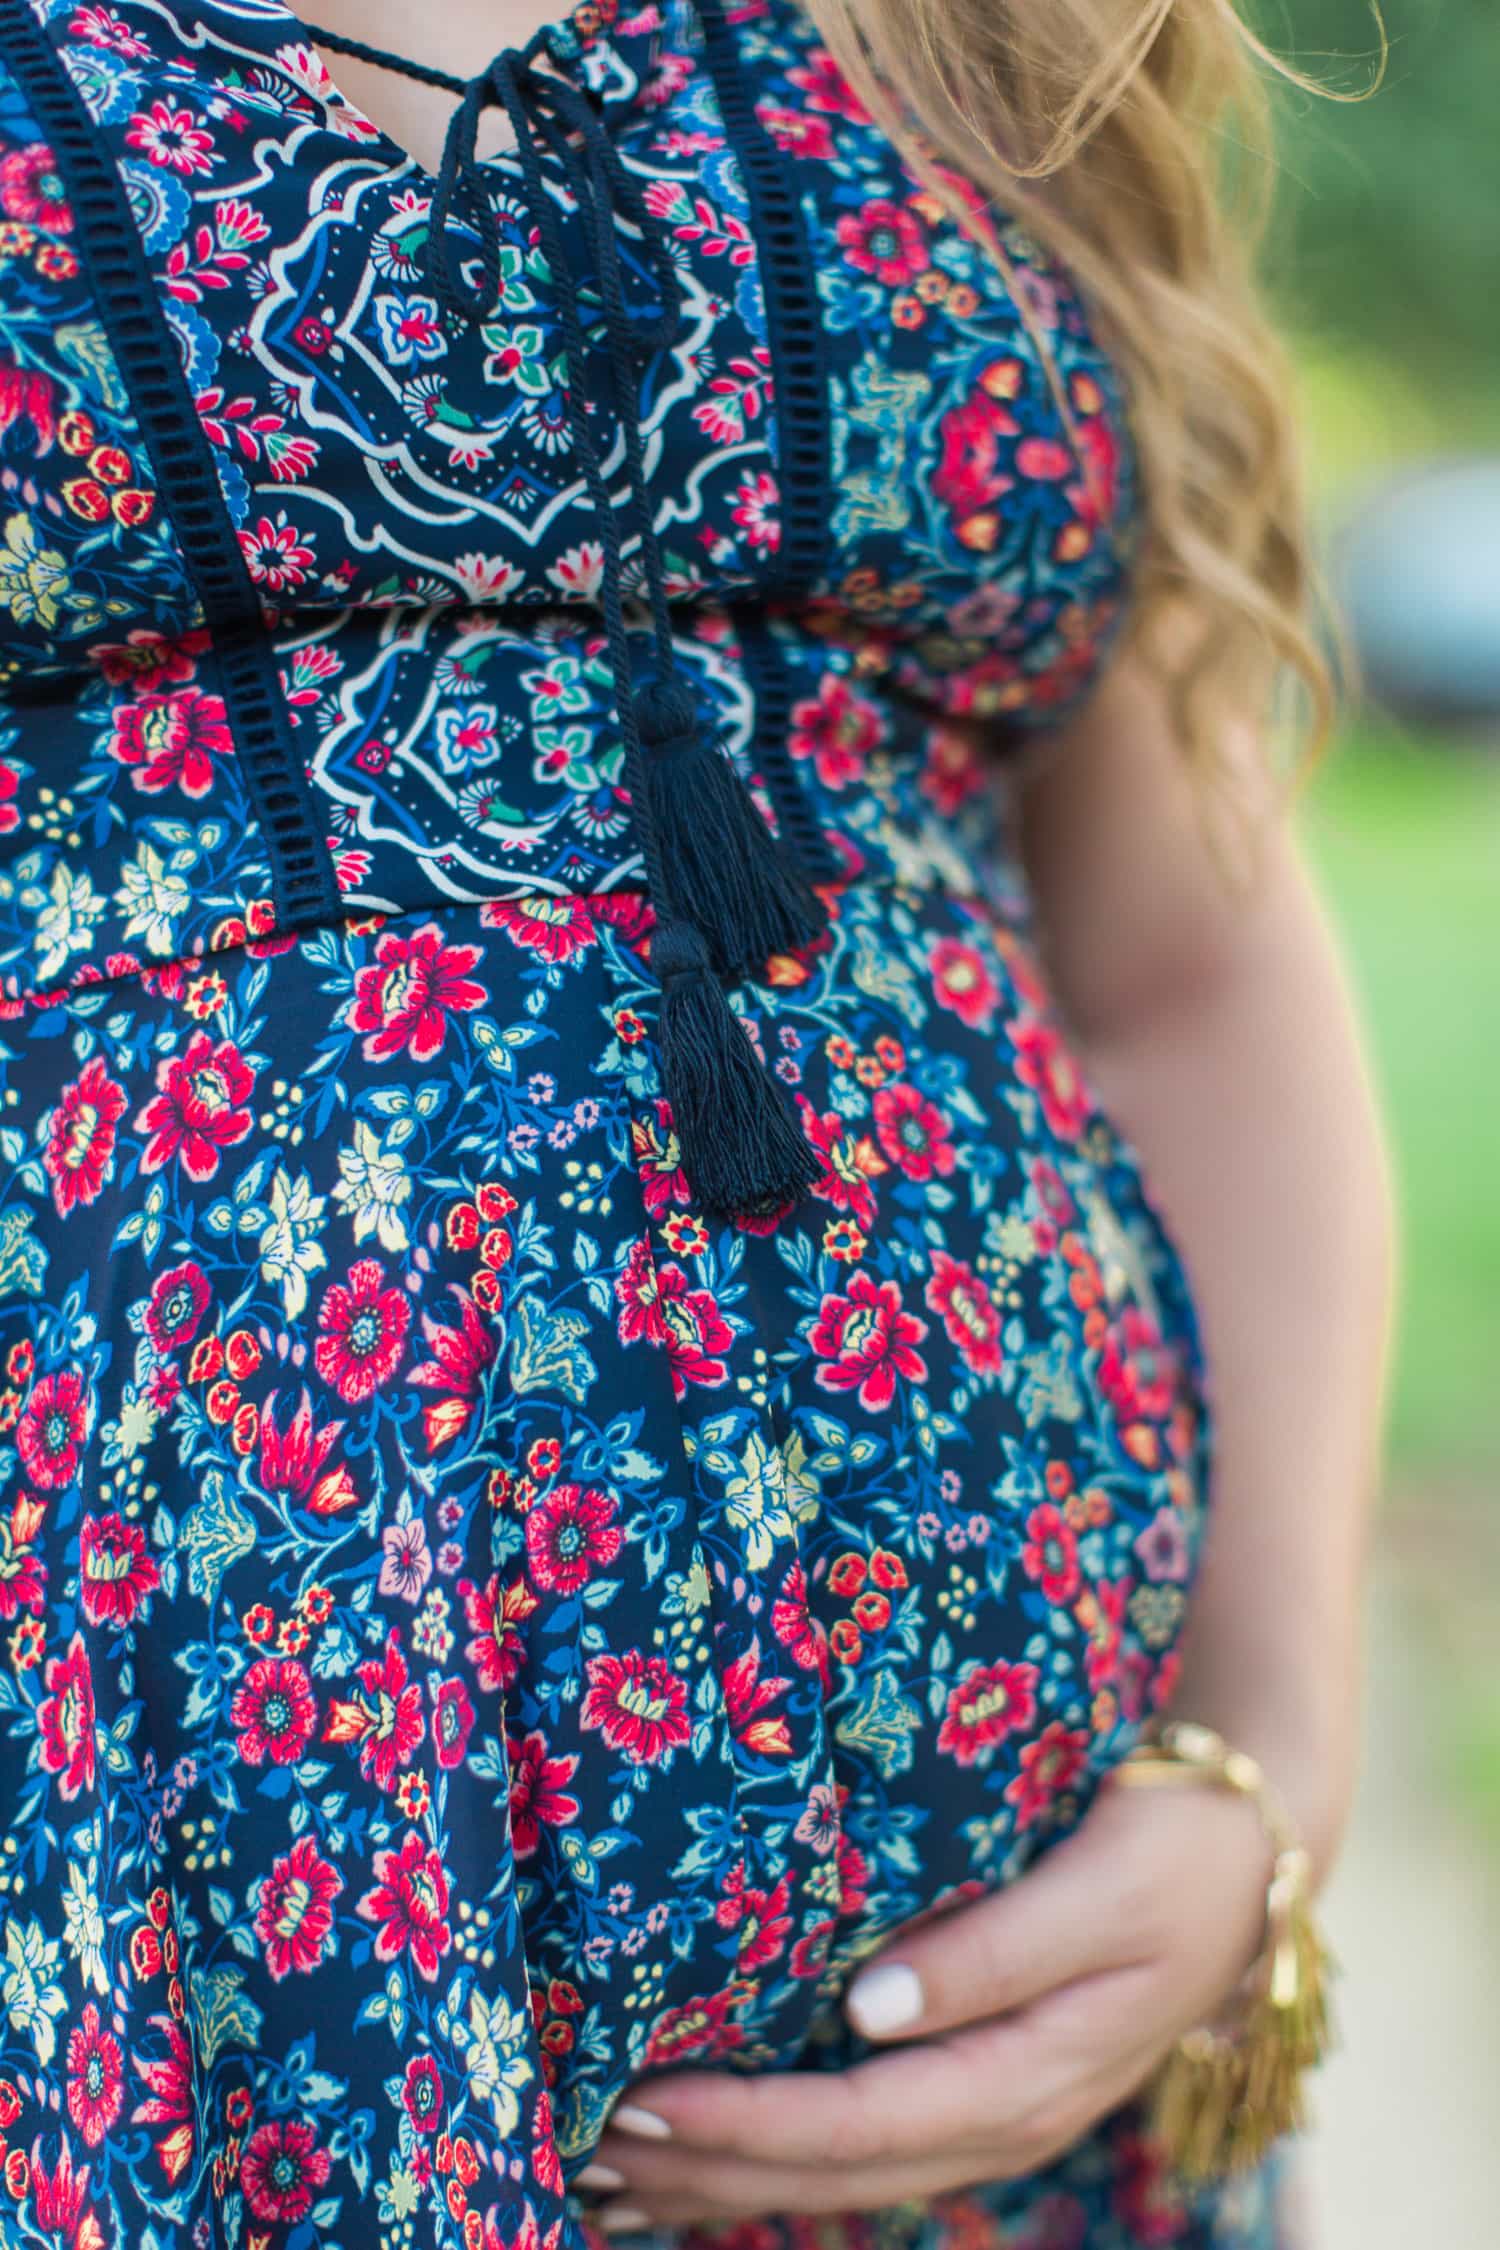 How to build confidence cute summer dress maternity fashion Ashley Brooke Nicholas beauty blogger